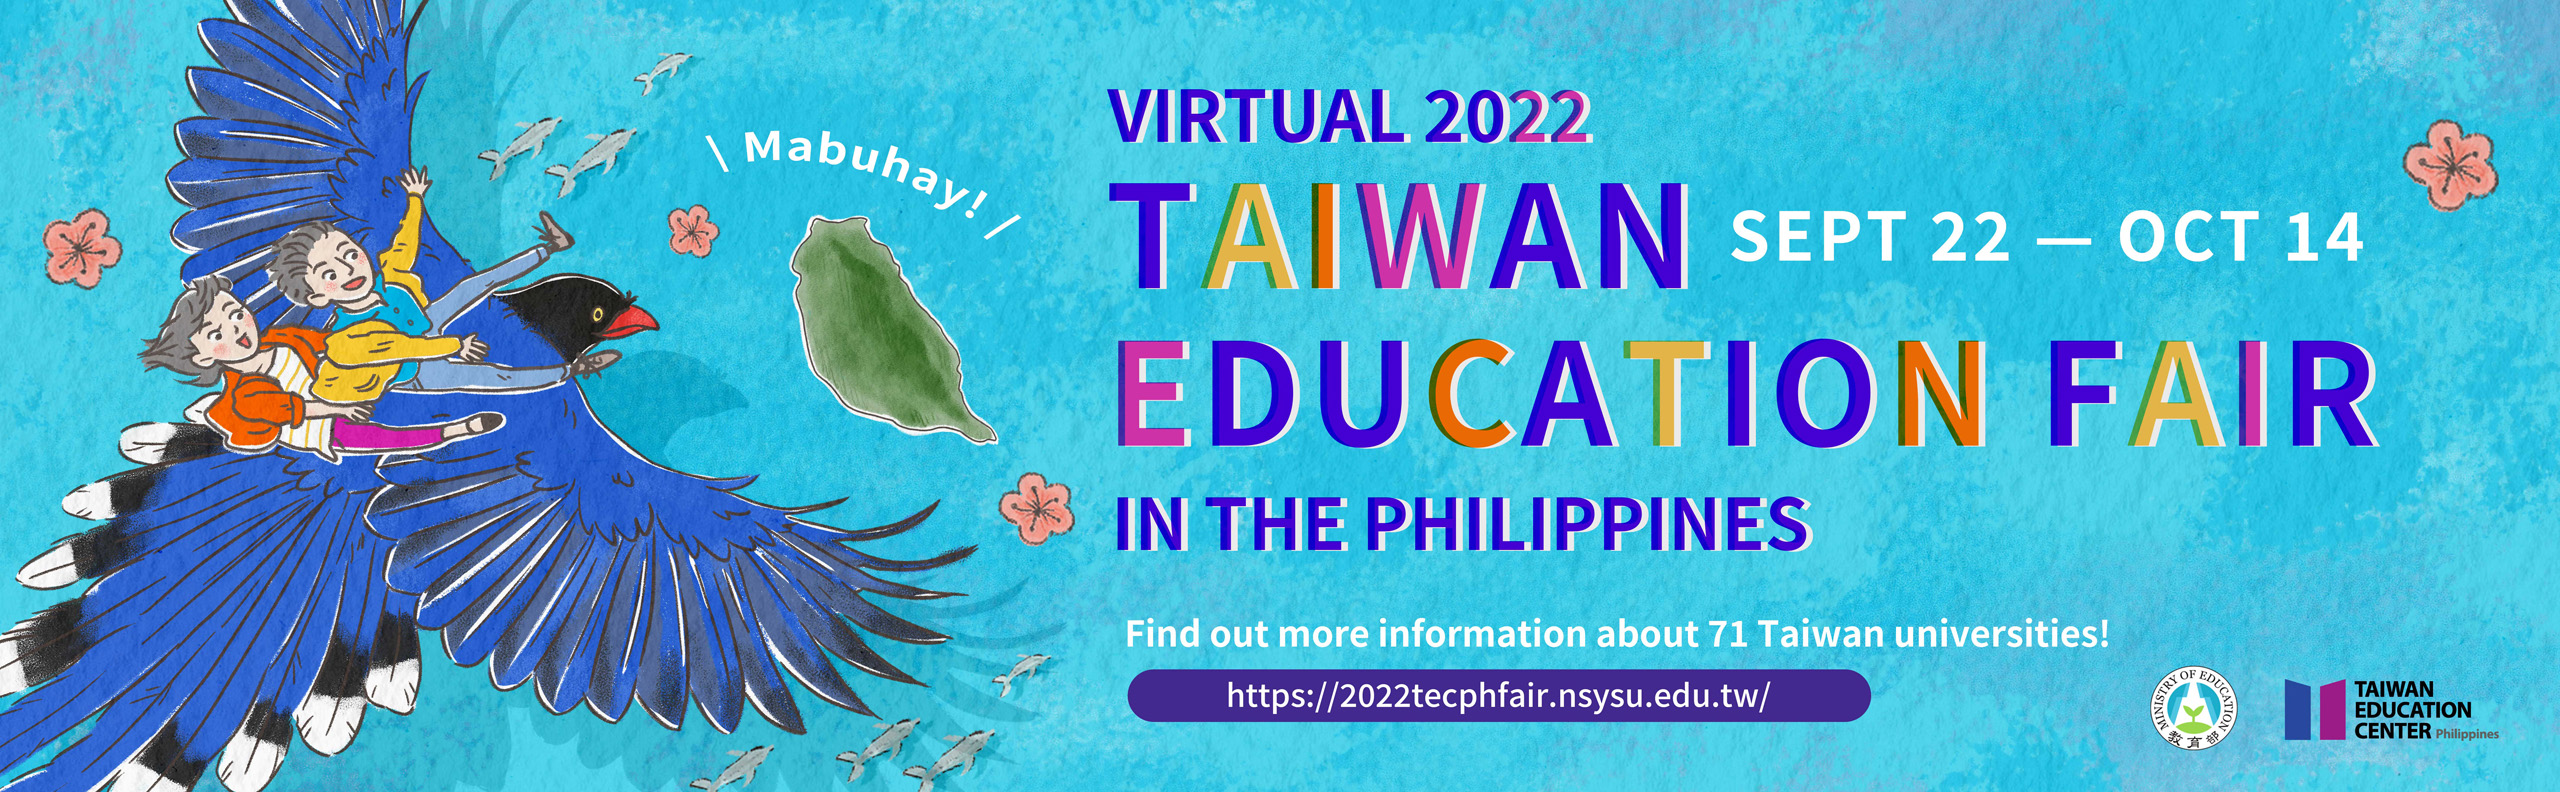 Taiwan education fair in the Philippines